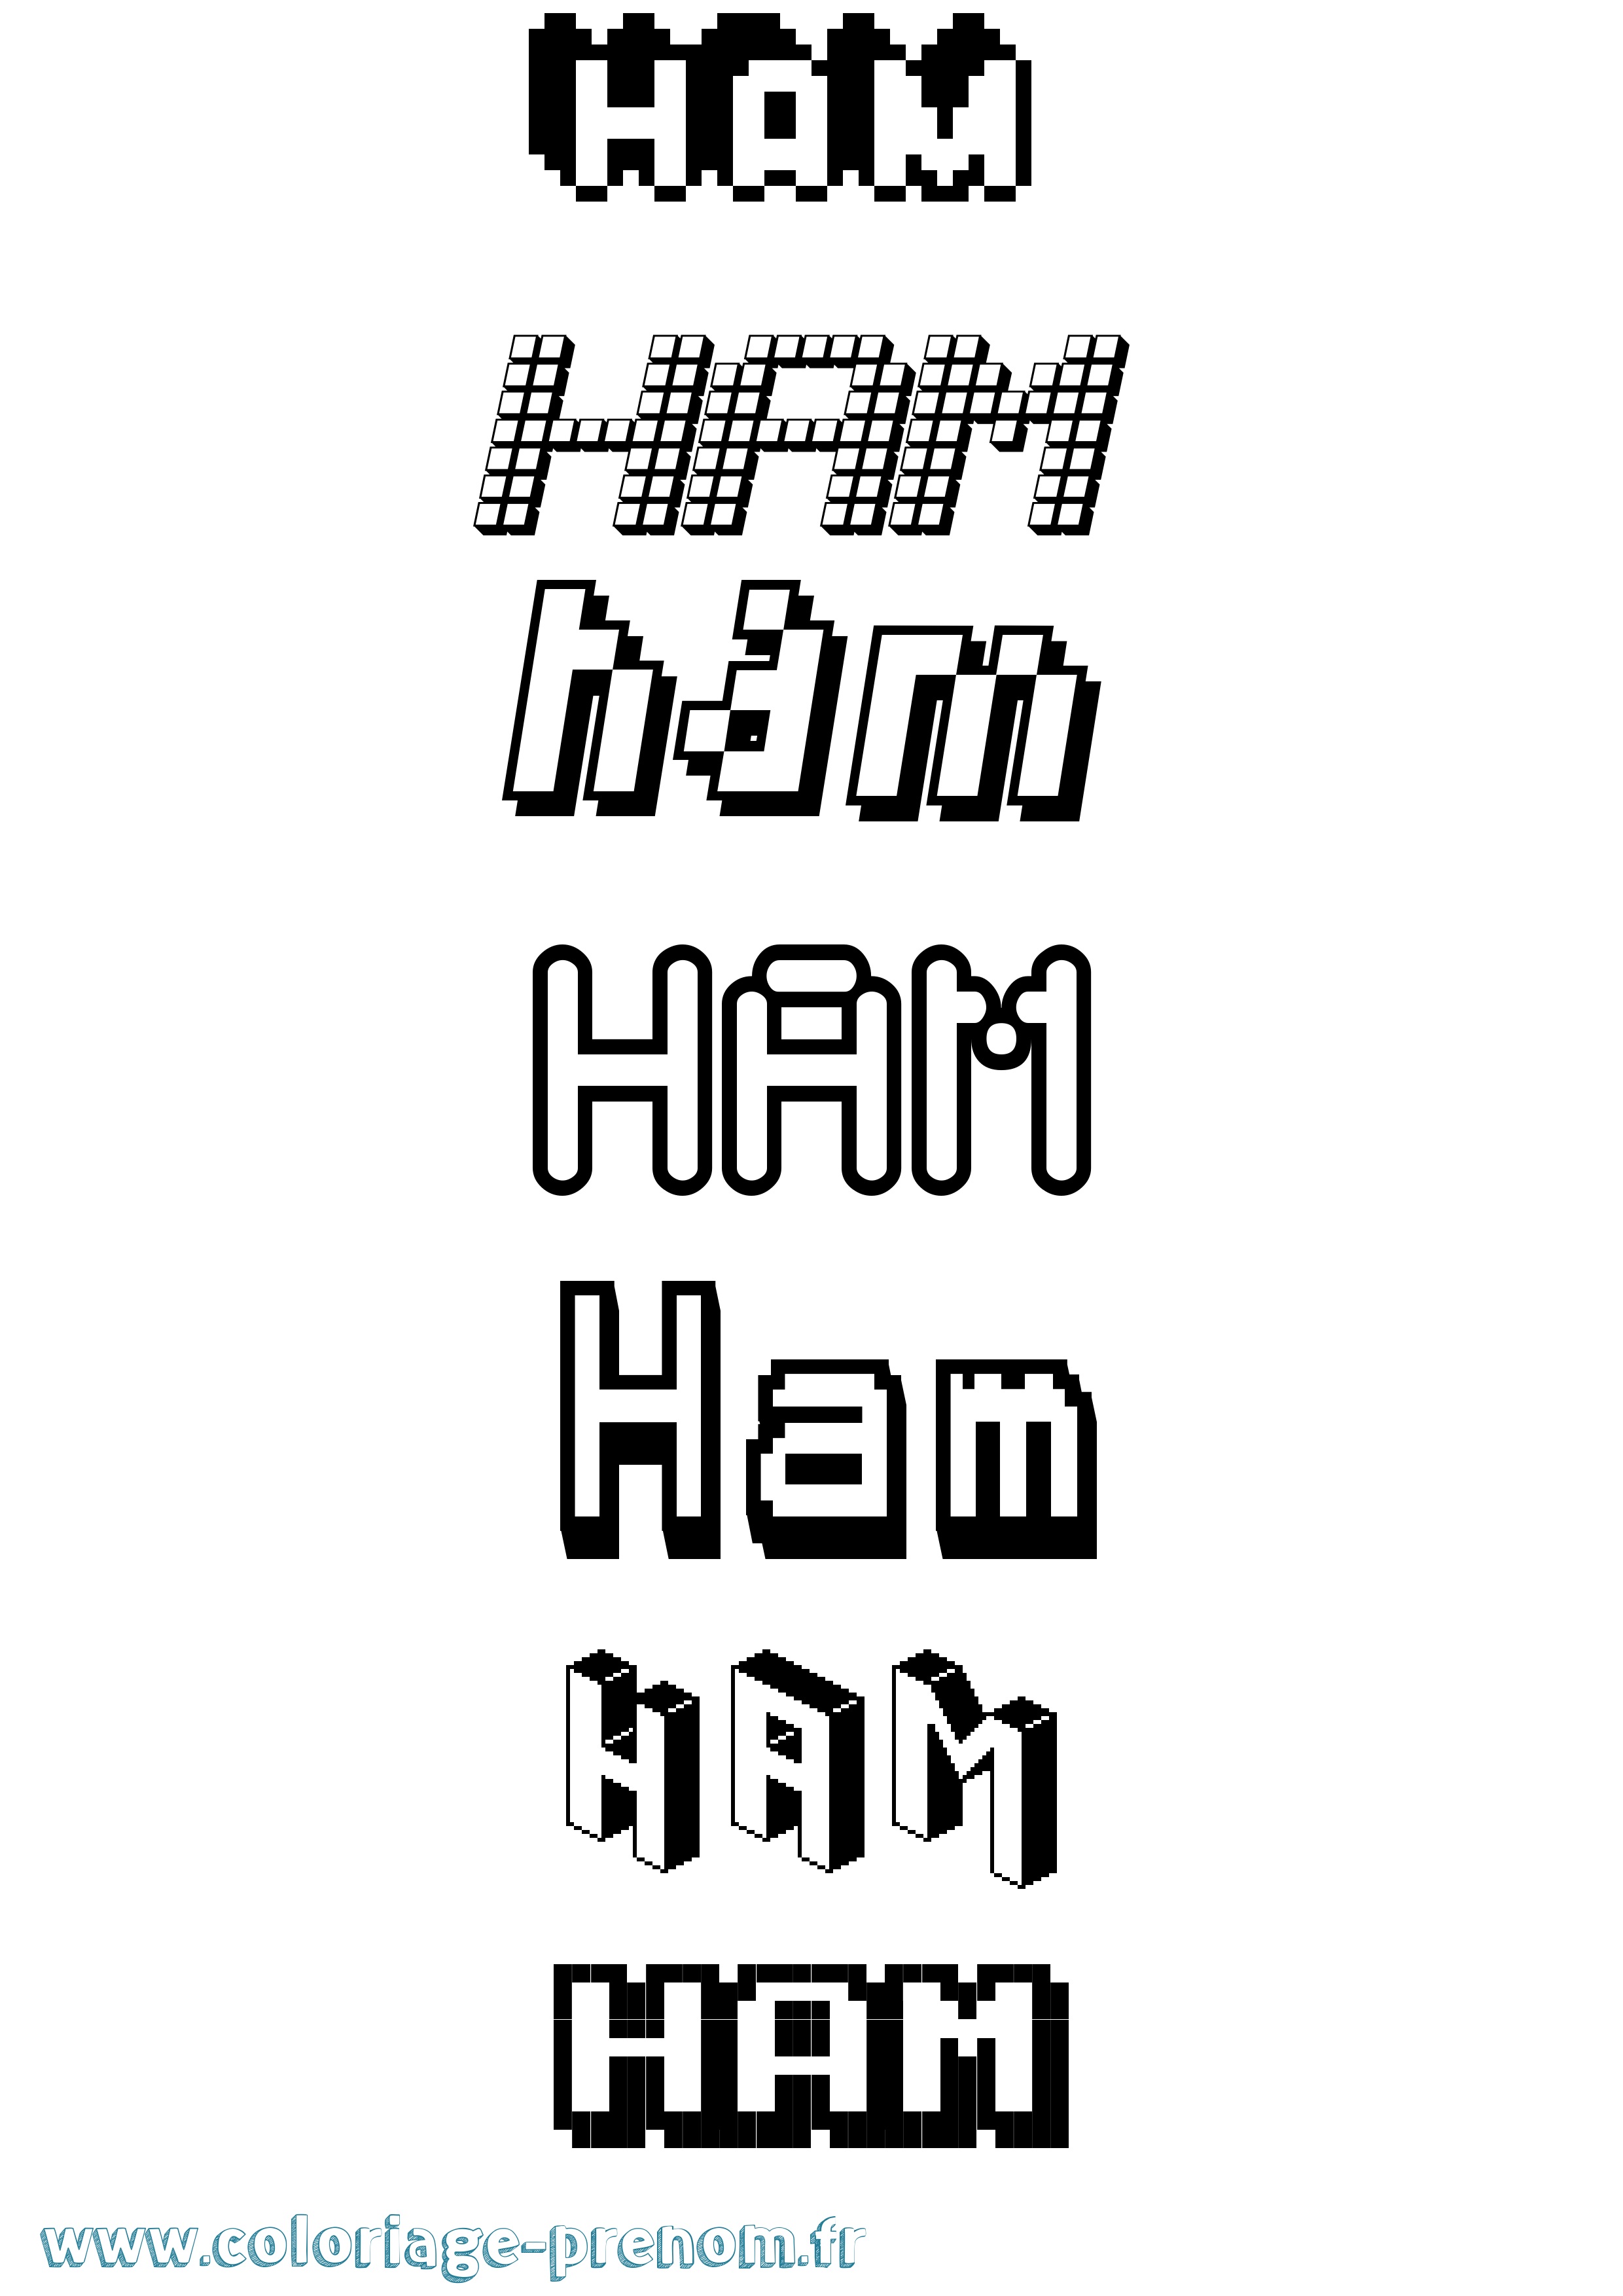 Coloriage prénom Ham Pixel